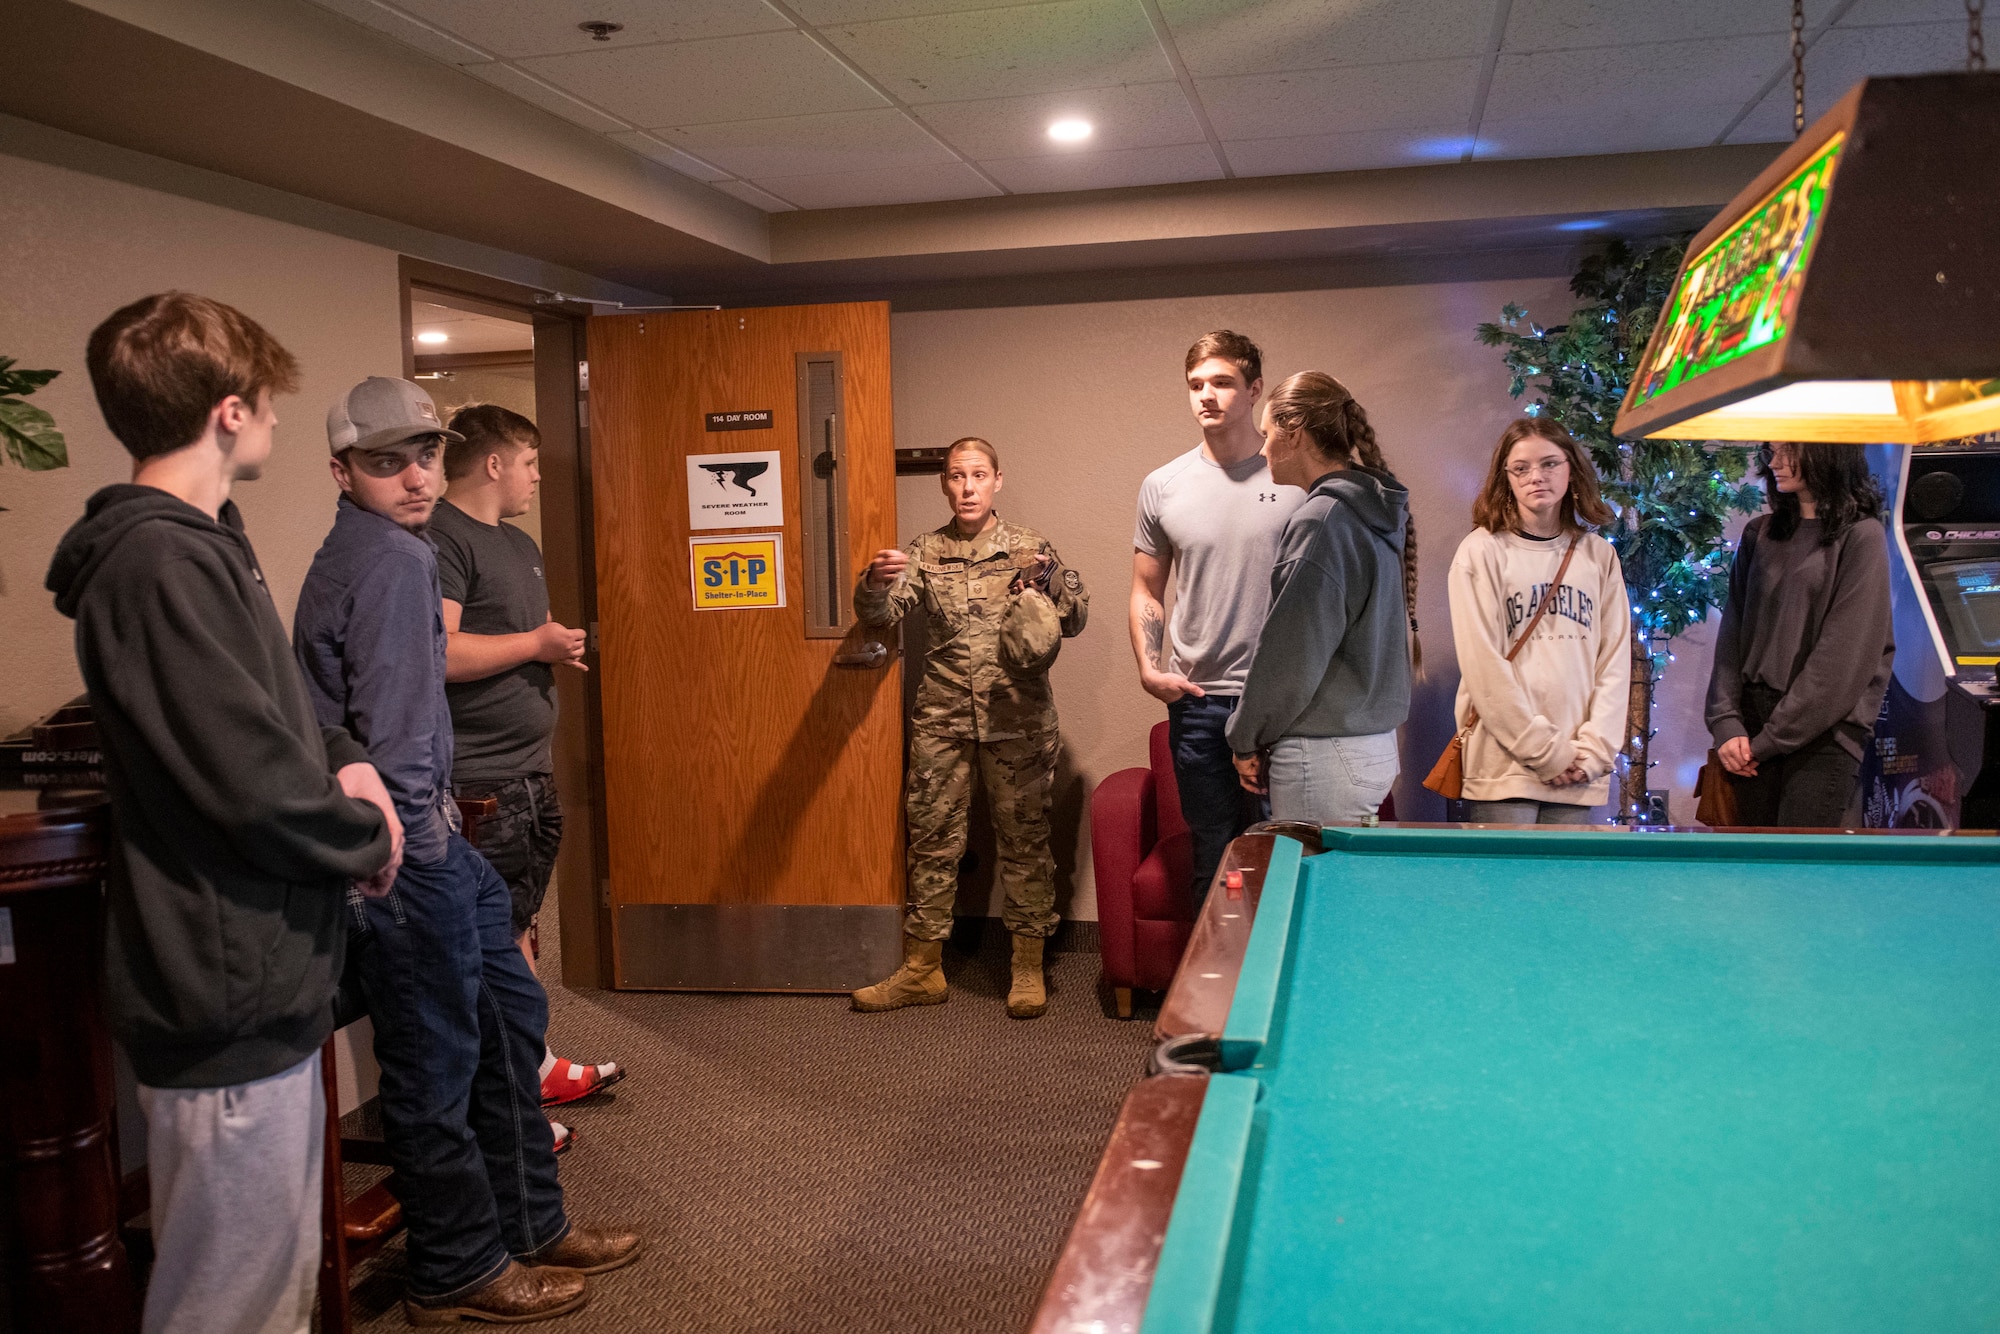 Prospective recruits from across Arkansas tour a dorm facility during a recruiting event